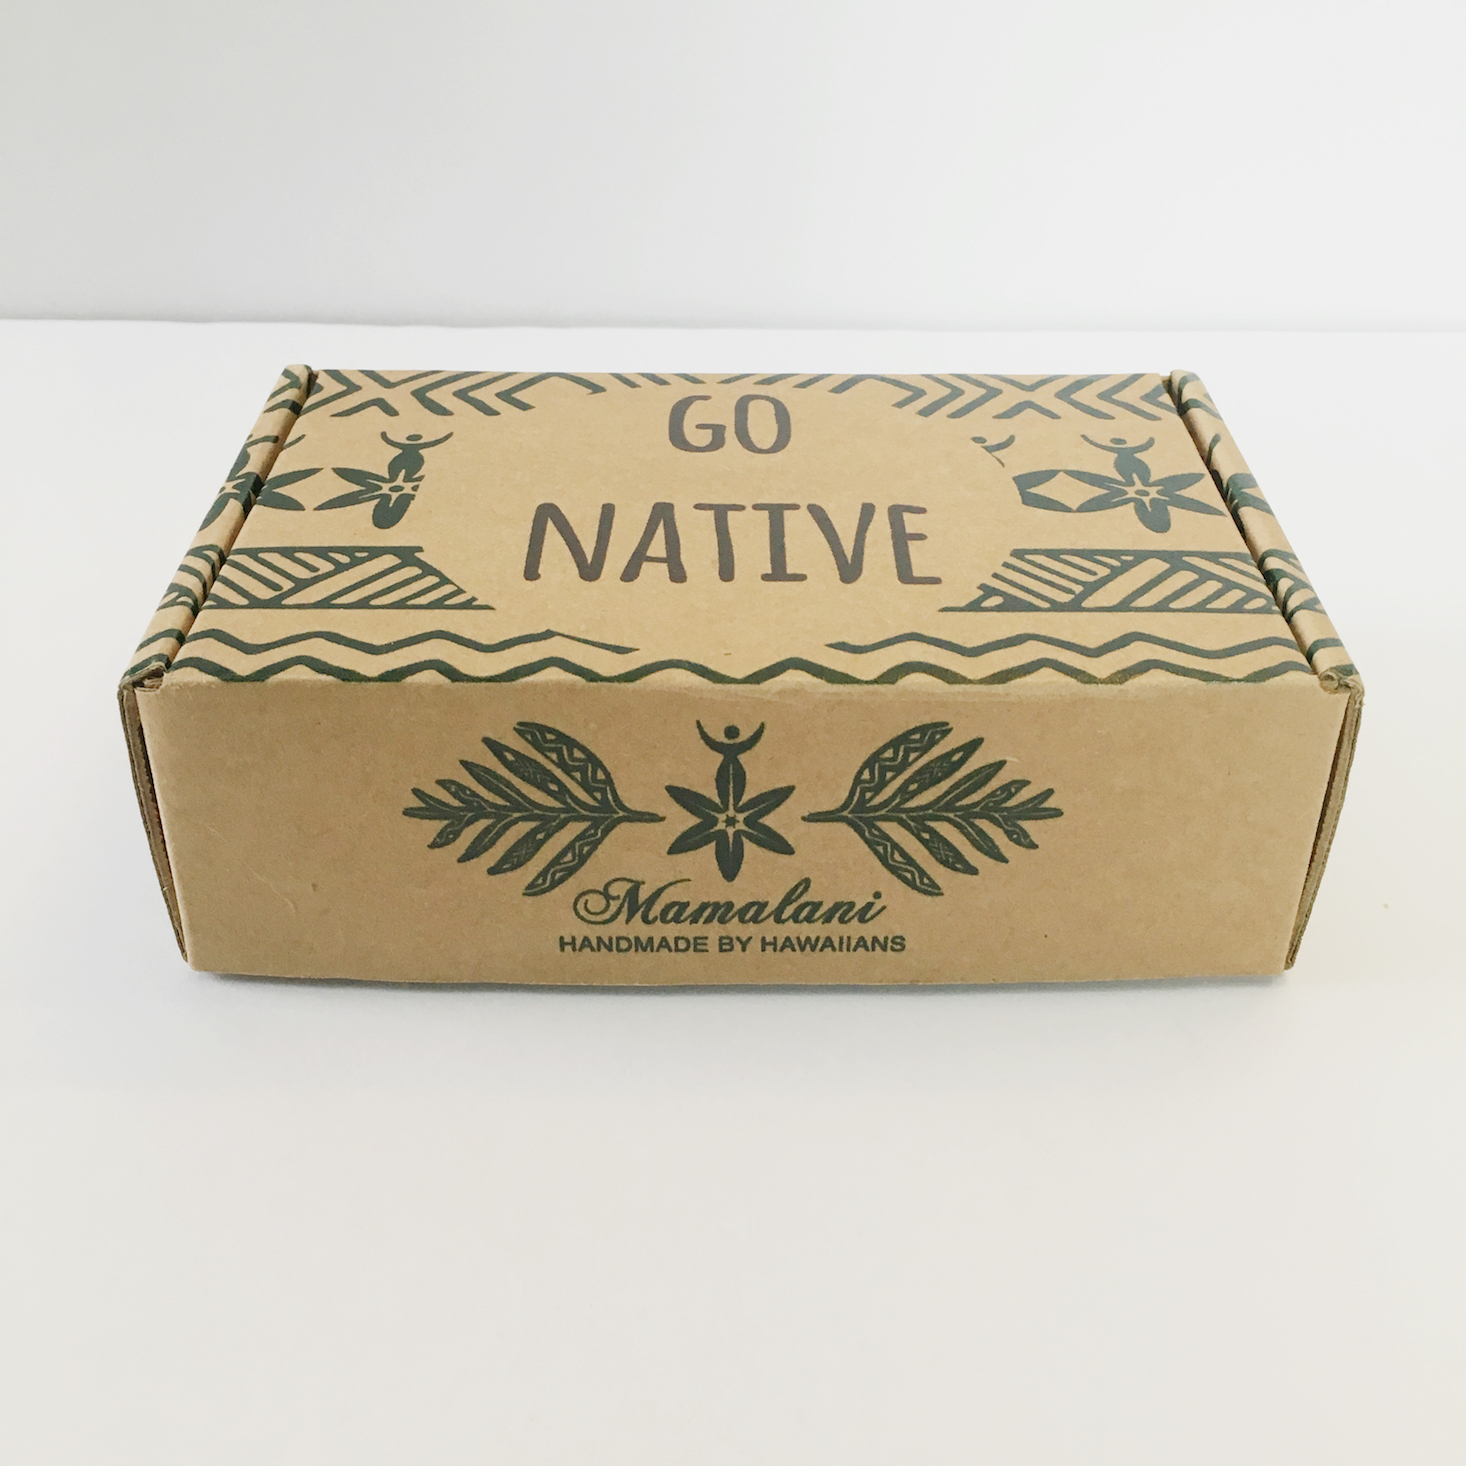 Go Native! Hawaiian Beauty Box Review + Coupon – December 2017